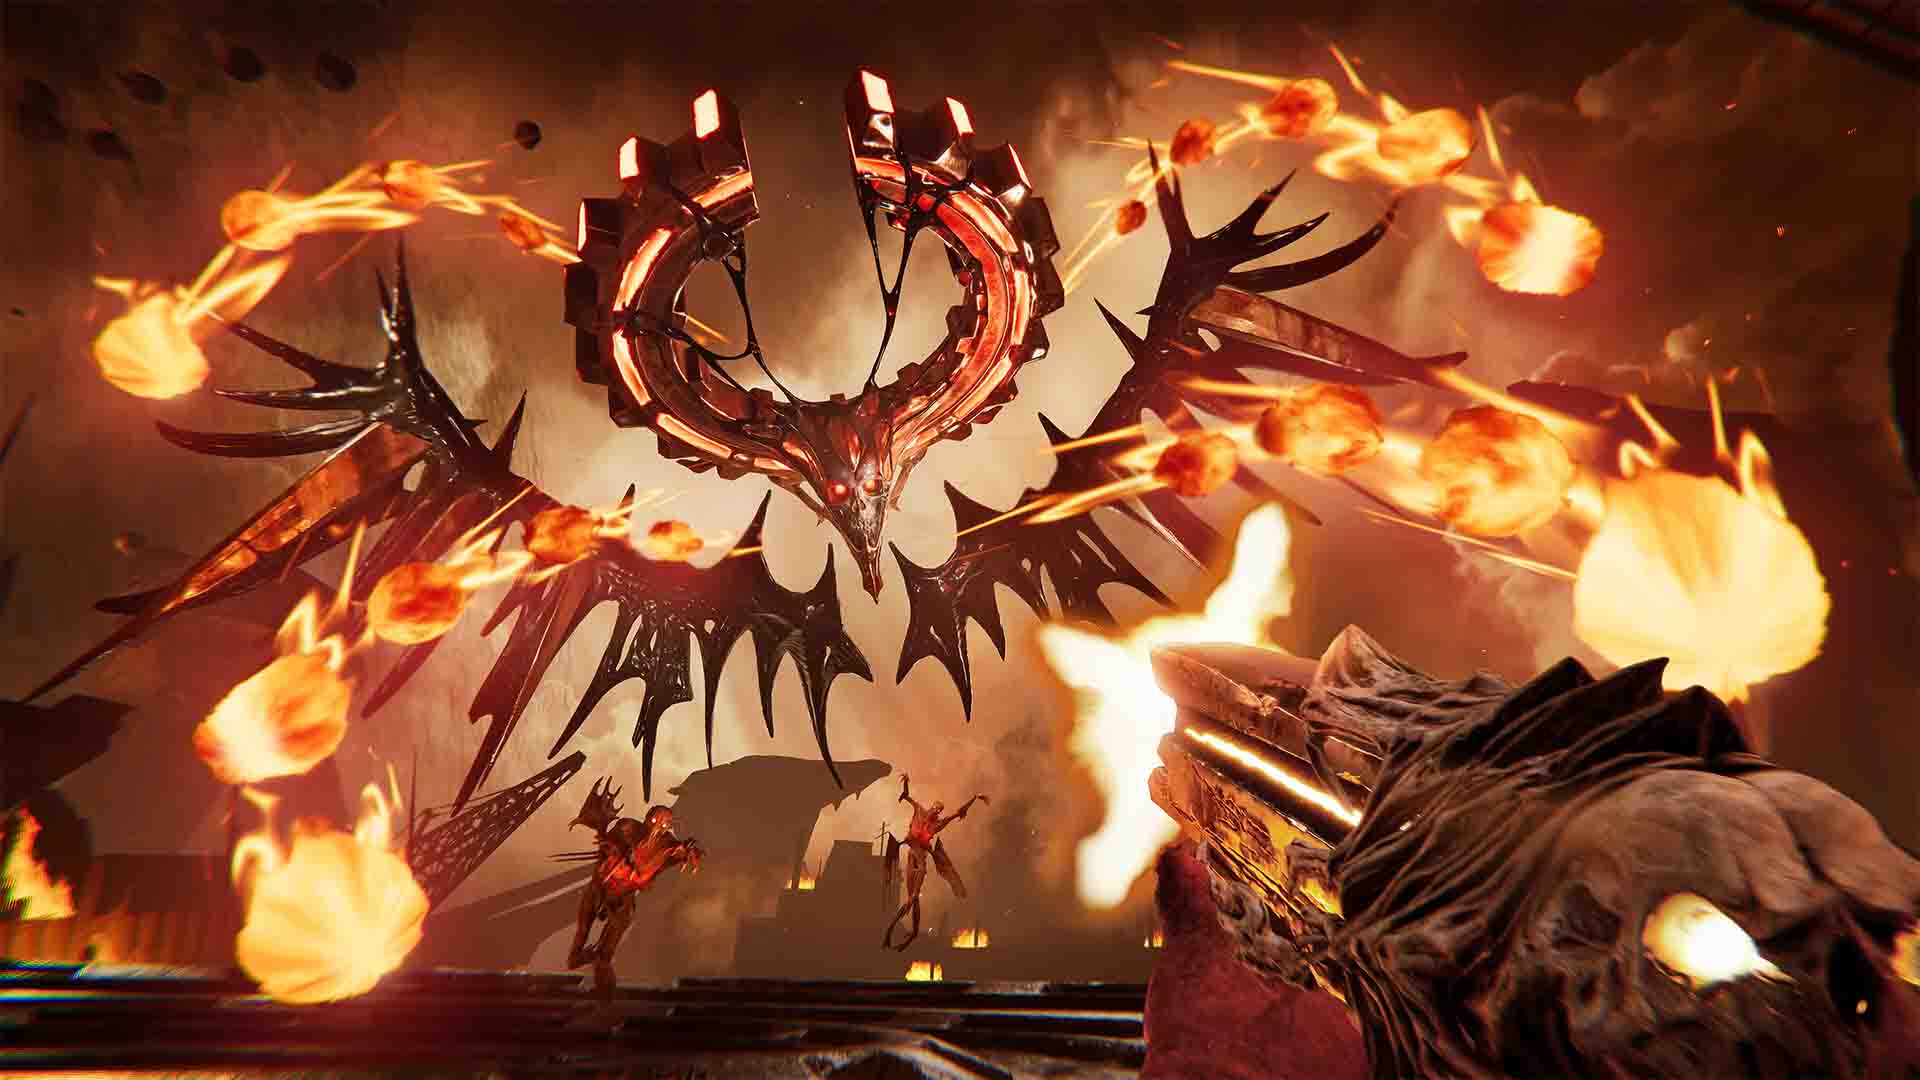 Metal: Hellsinger Purgatory DLC and free Horde Mode released